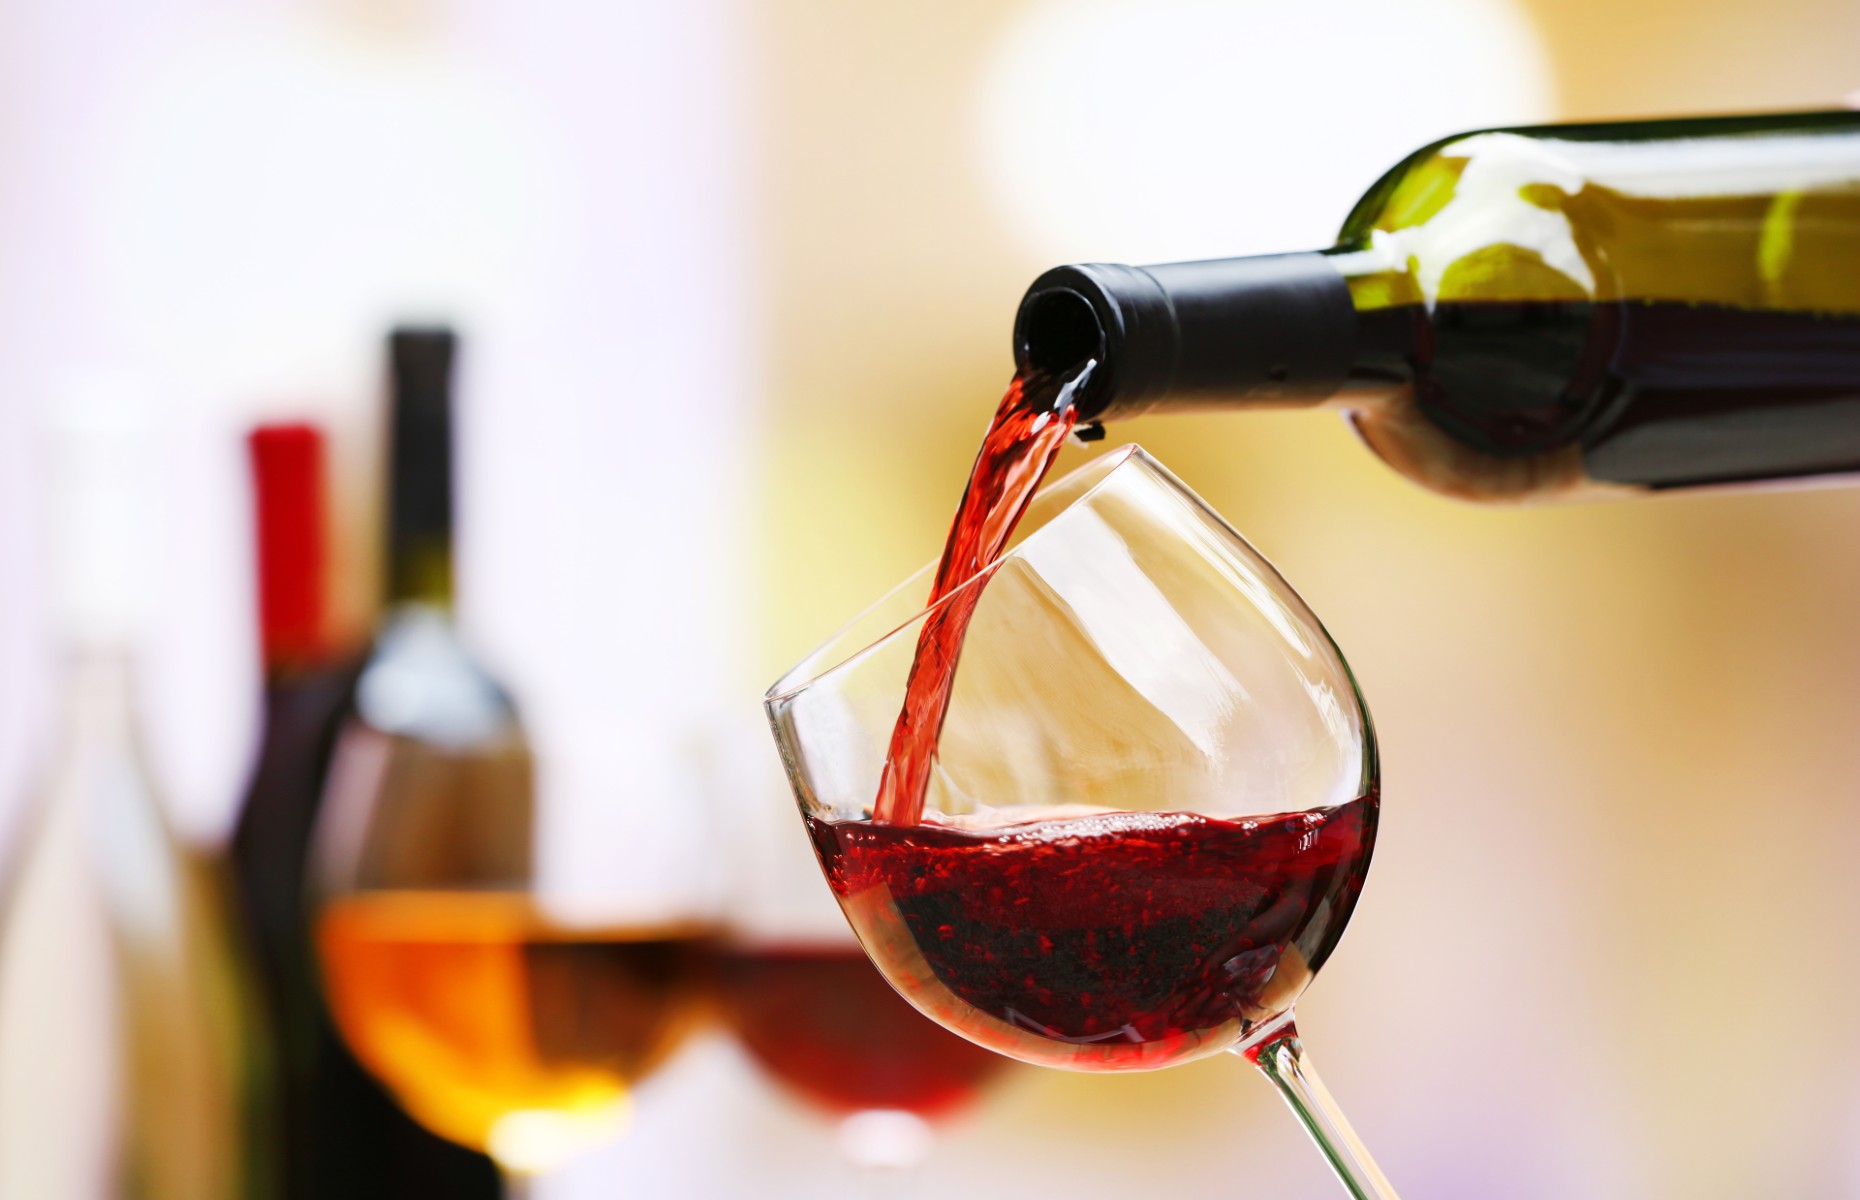 Low alcohol wine [Image: Africa Studio/Shutterstock]